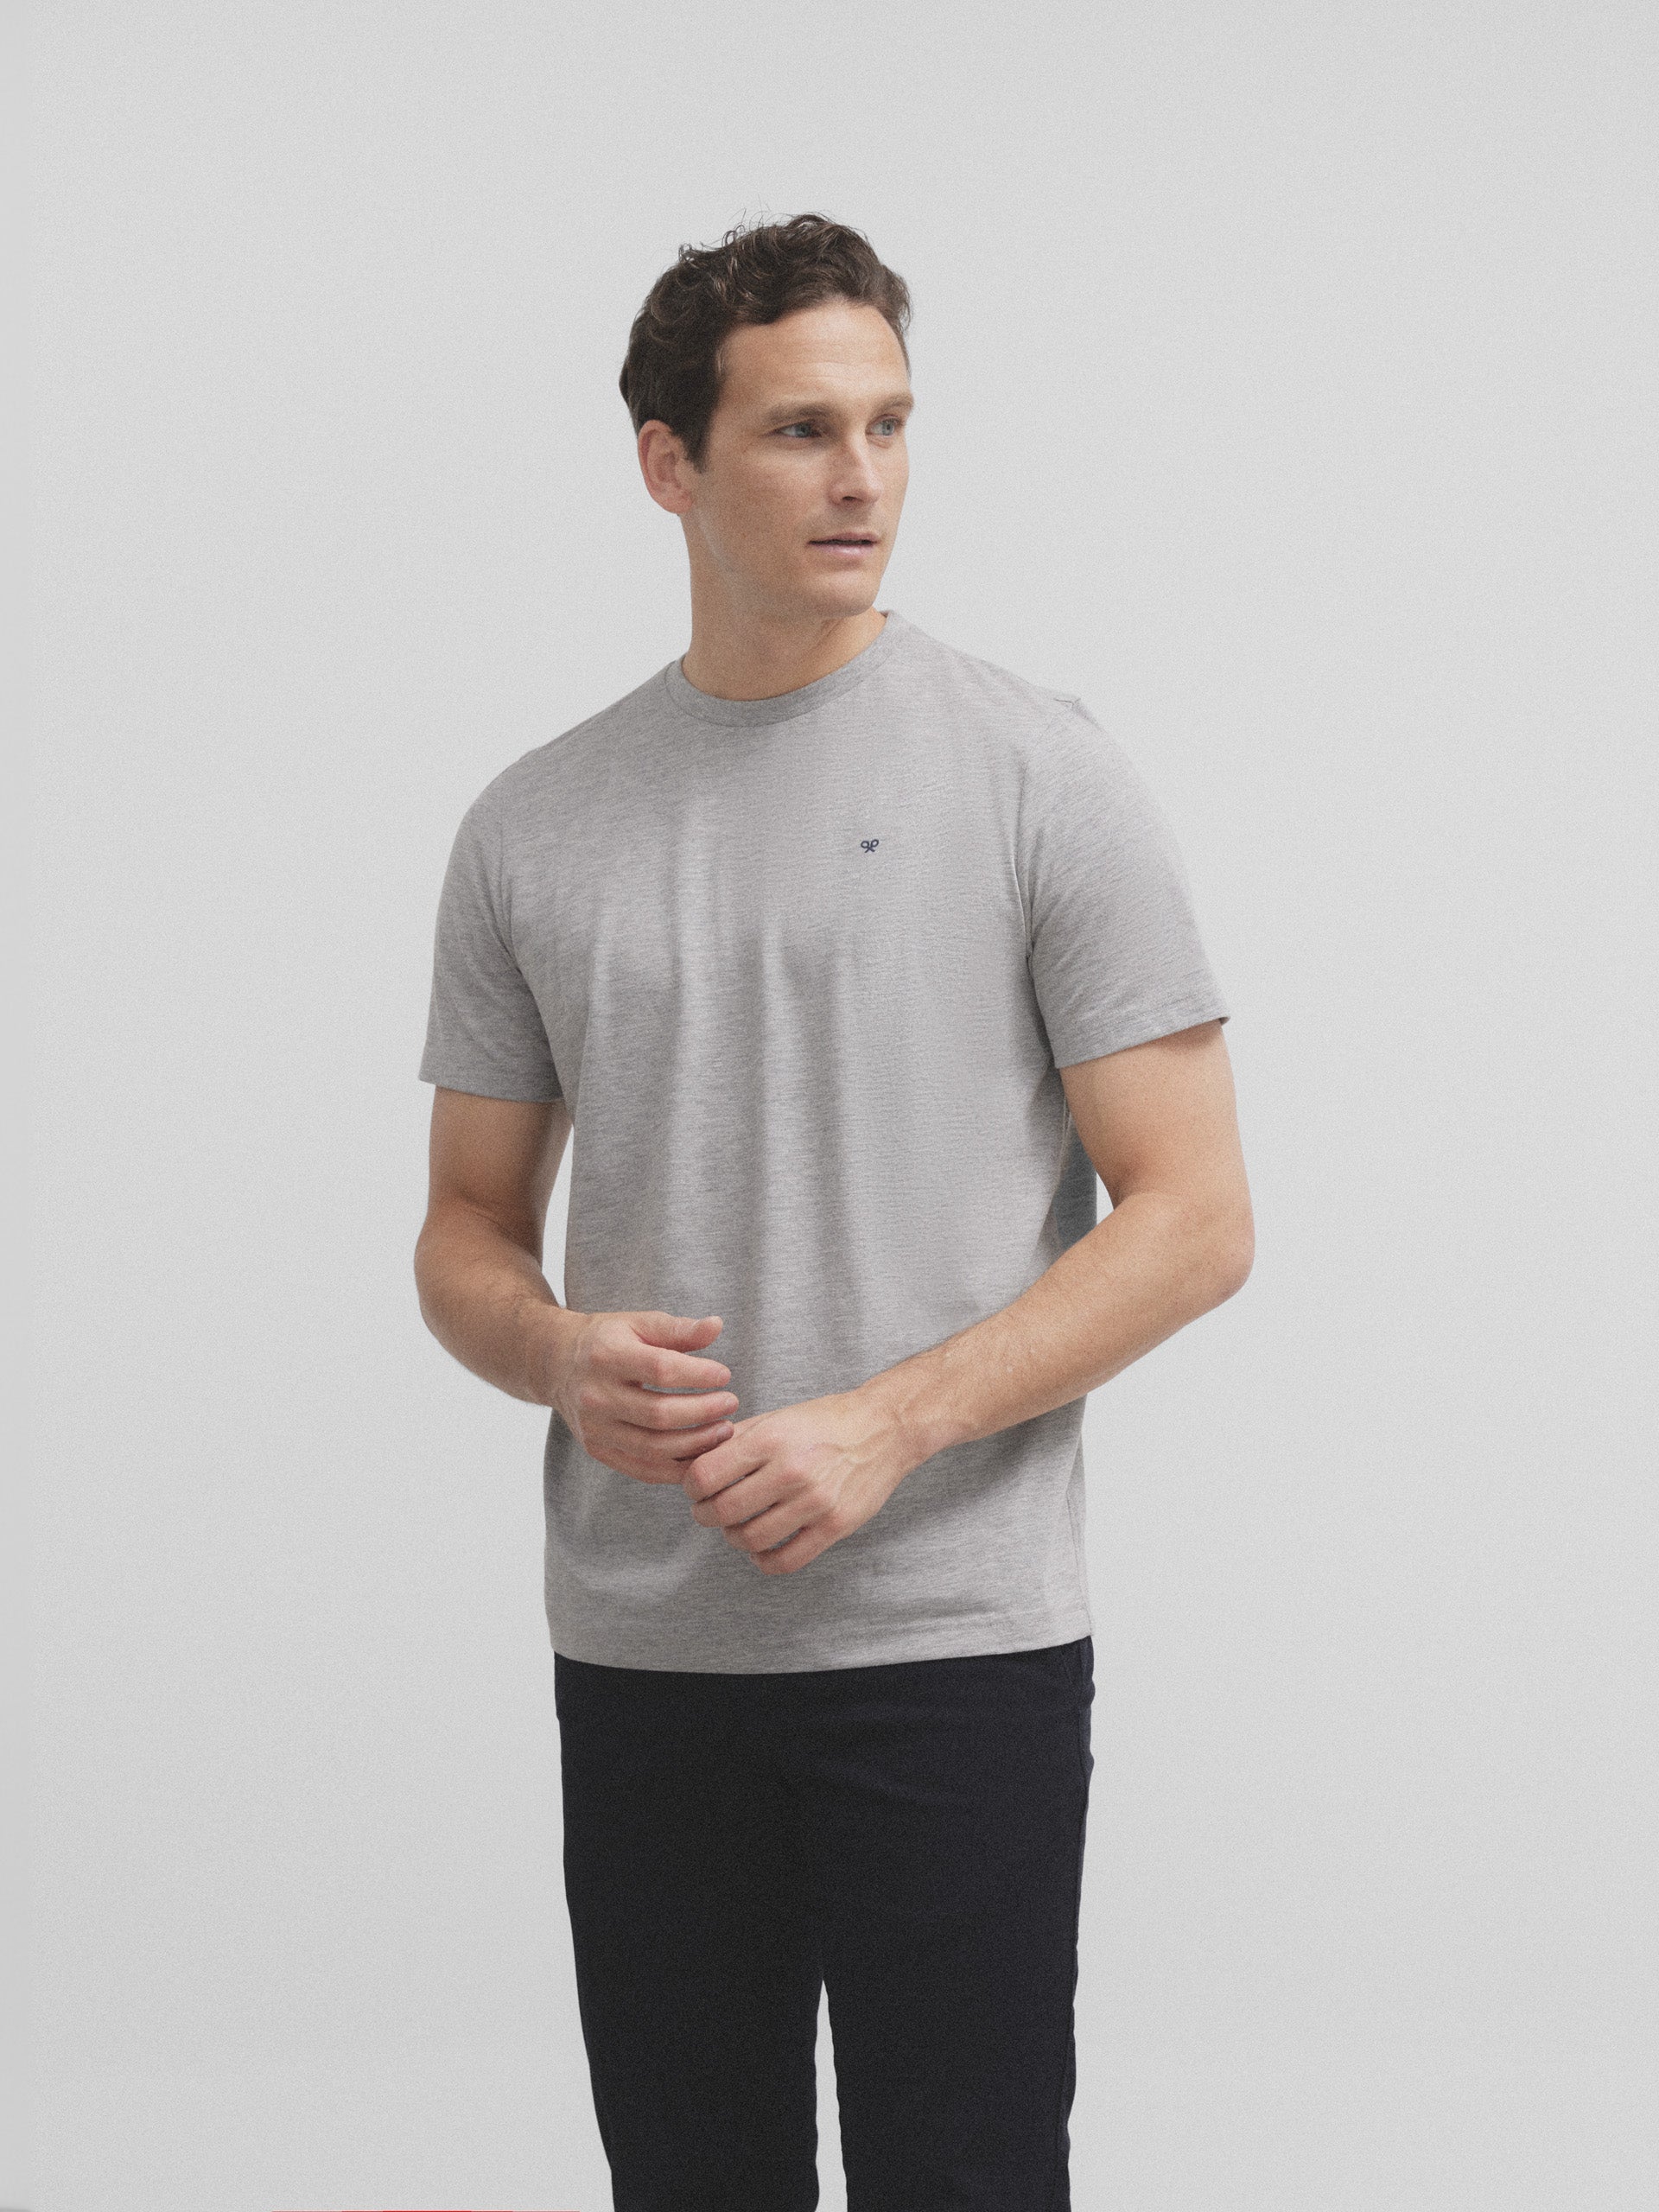 Silbon mini logo gray t-shirt